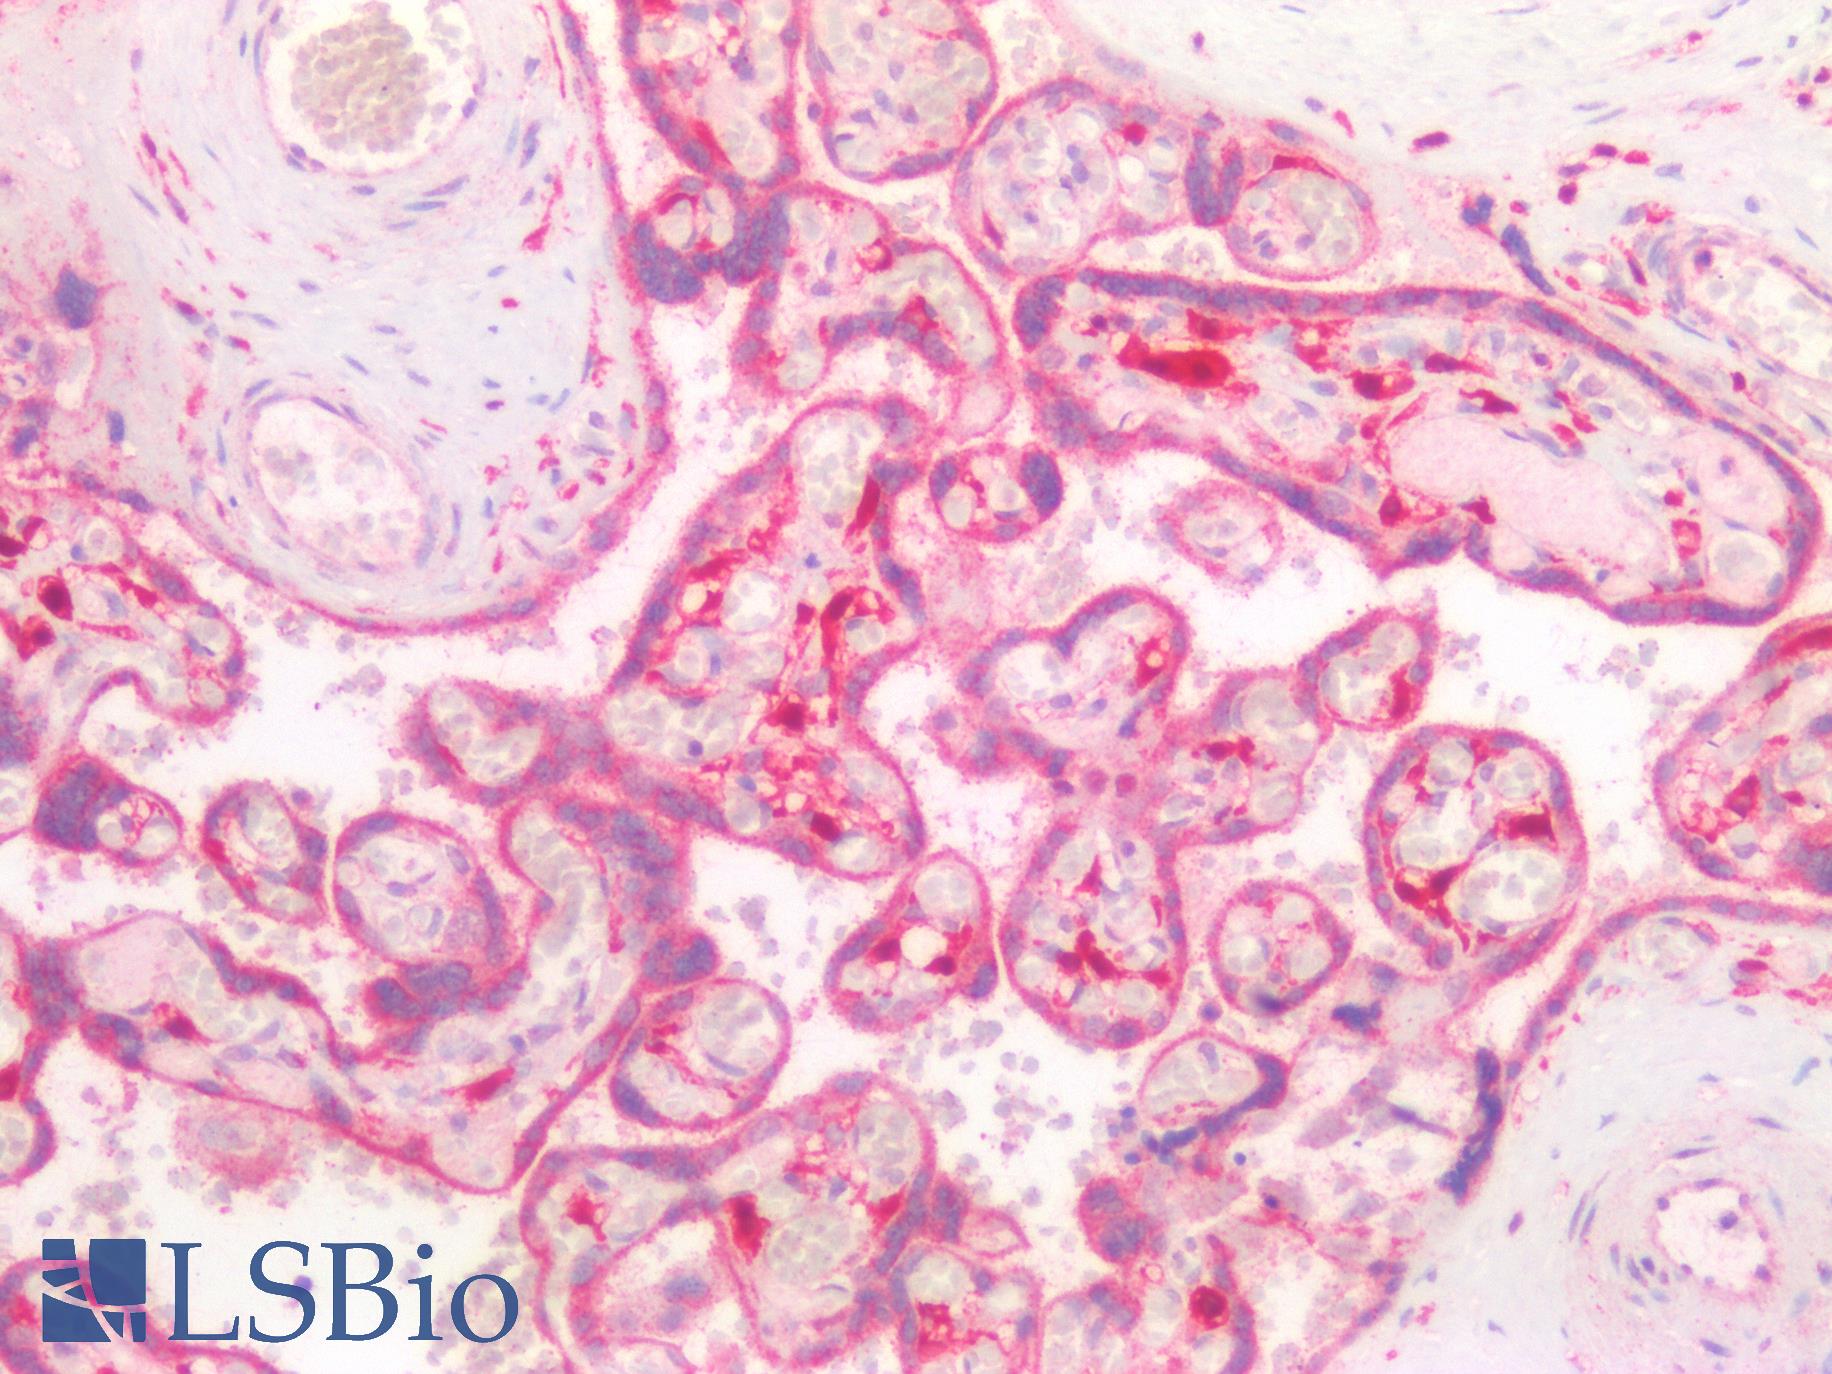 GNAQ Antibody - Human Placenta: Formalin-Fixed, Paraffin-Embedded (FFPE)